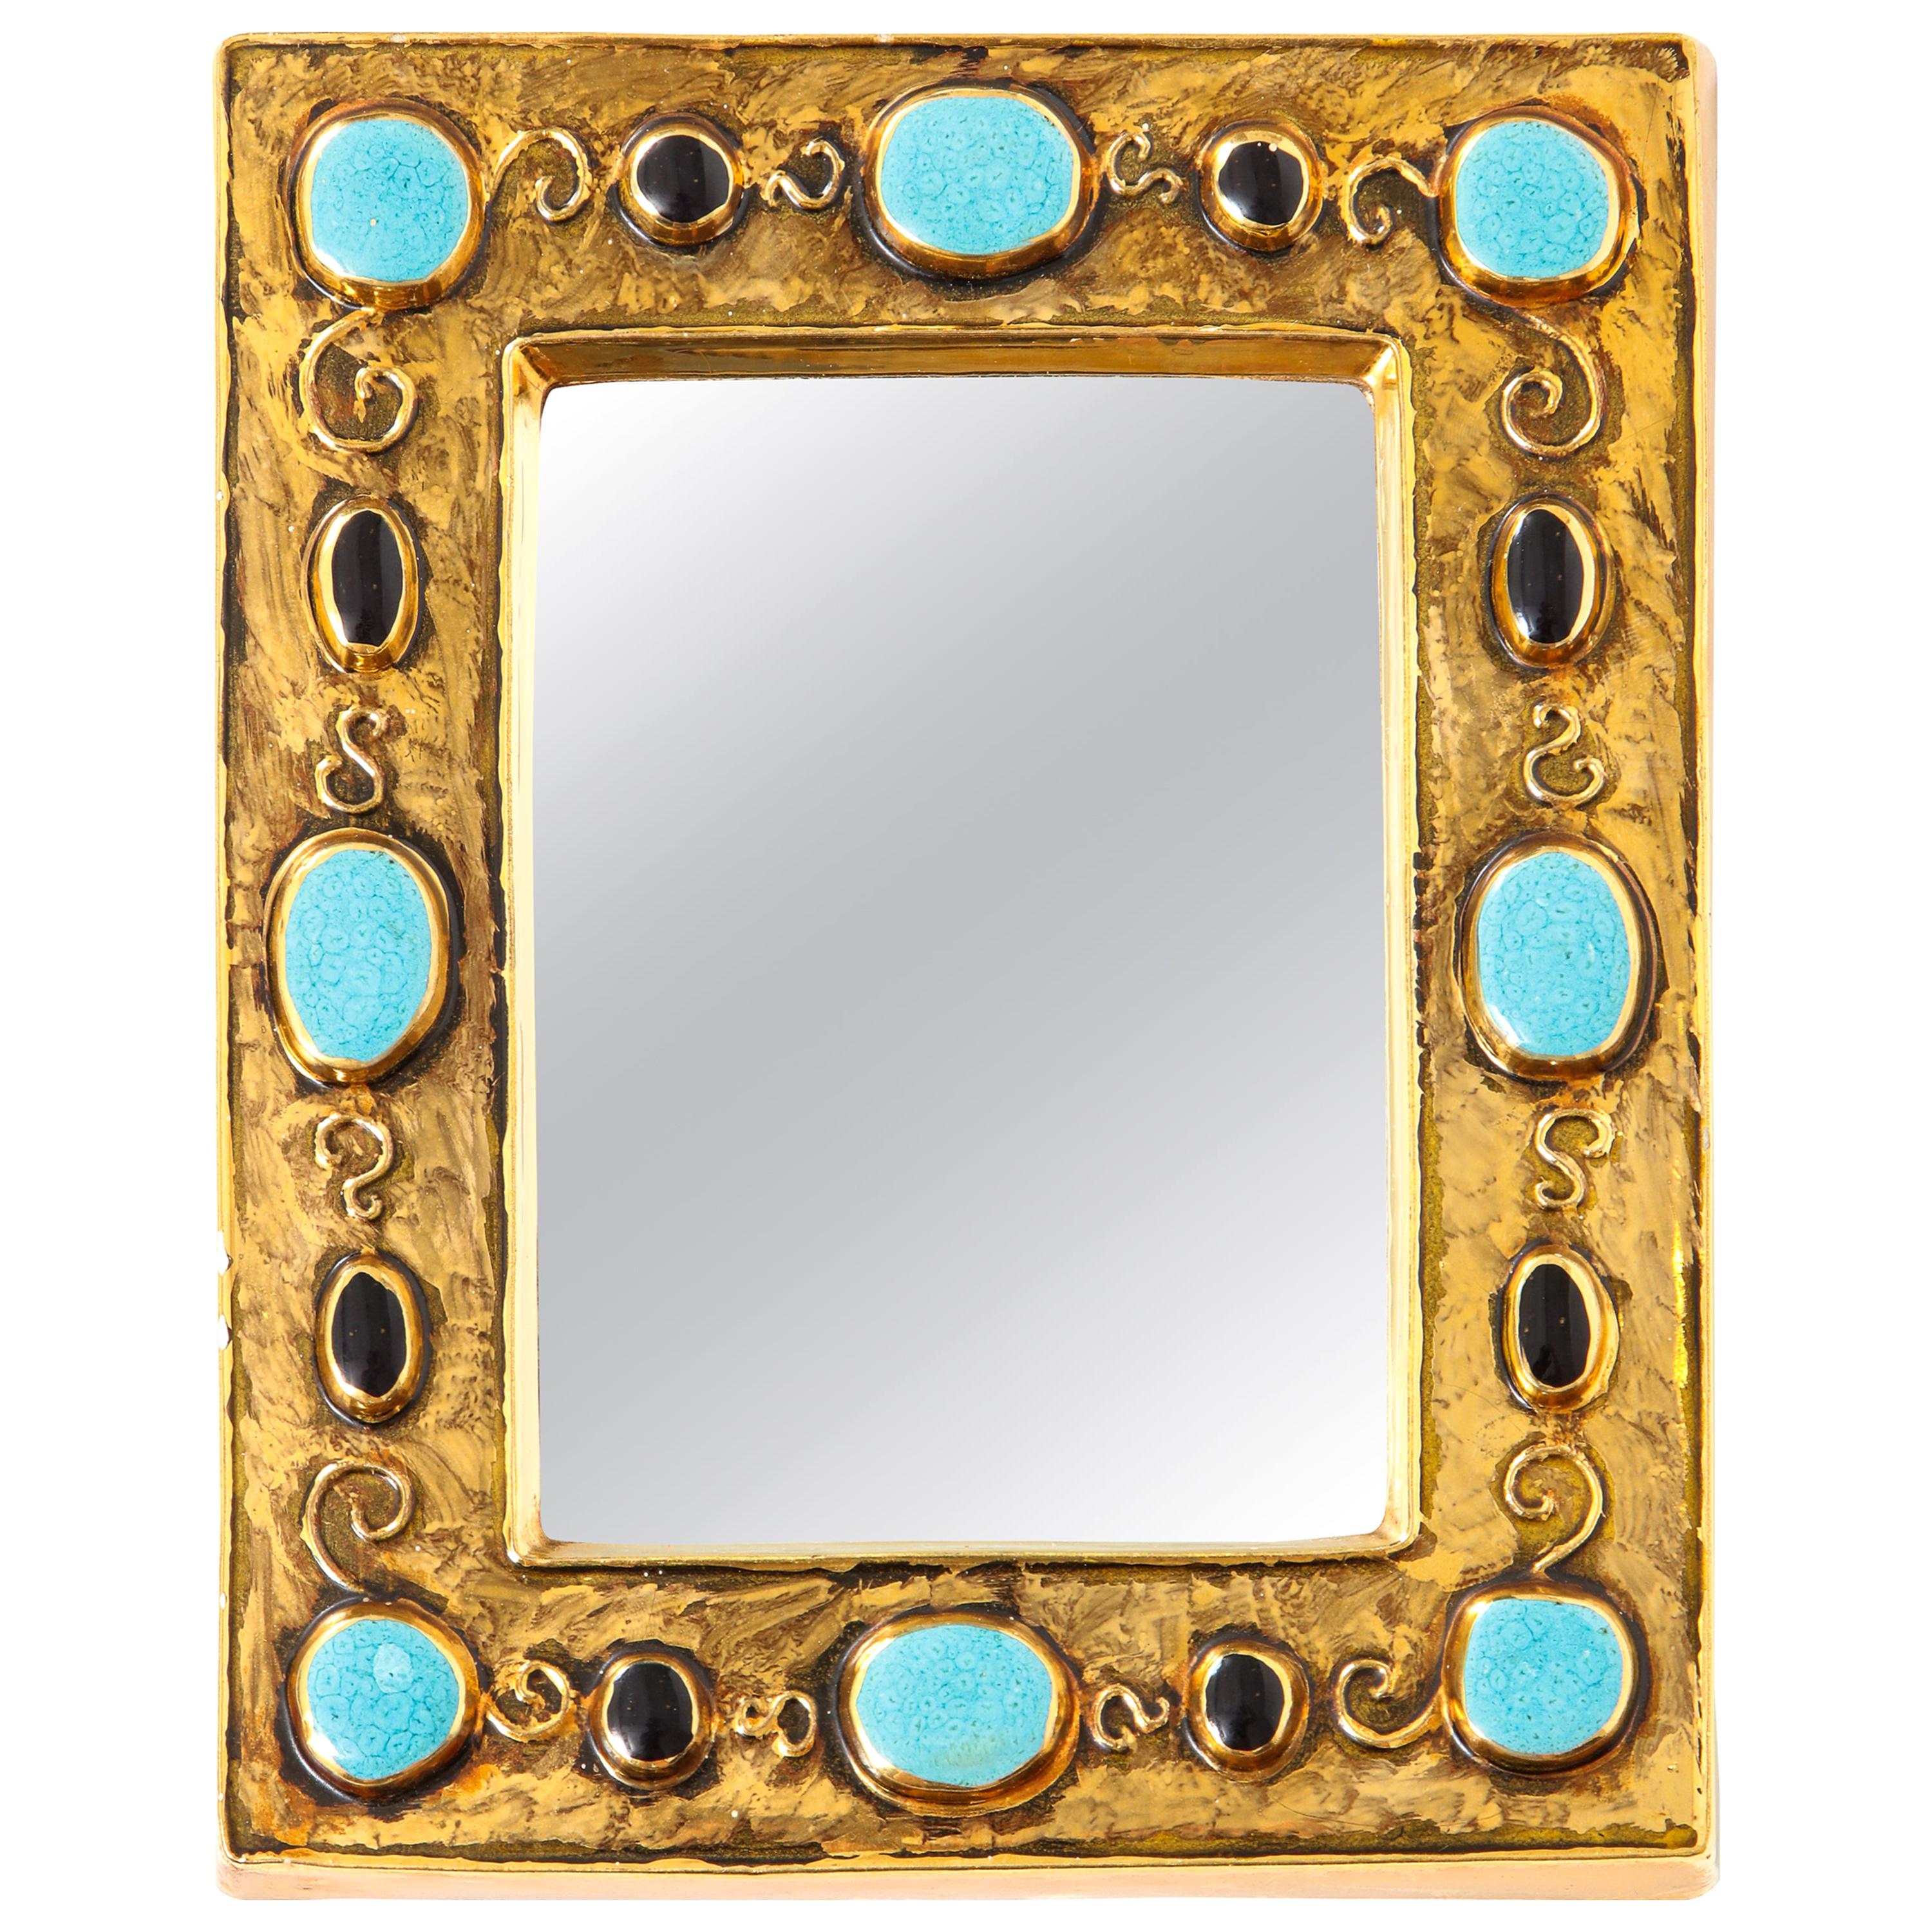 Francois Lembo Mirror, Ceramic, Jeweled, Gold, Black, and Turquoise, Signed